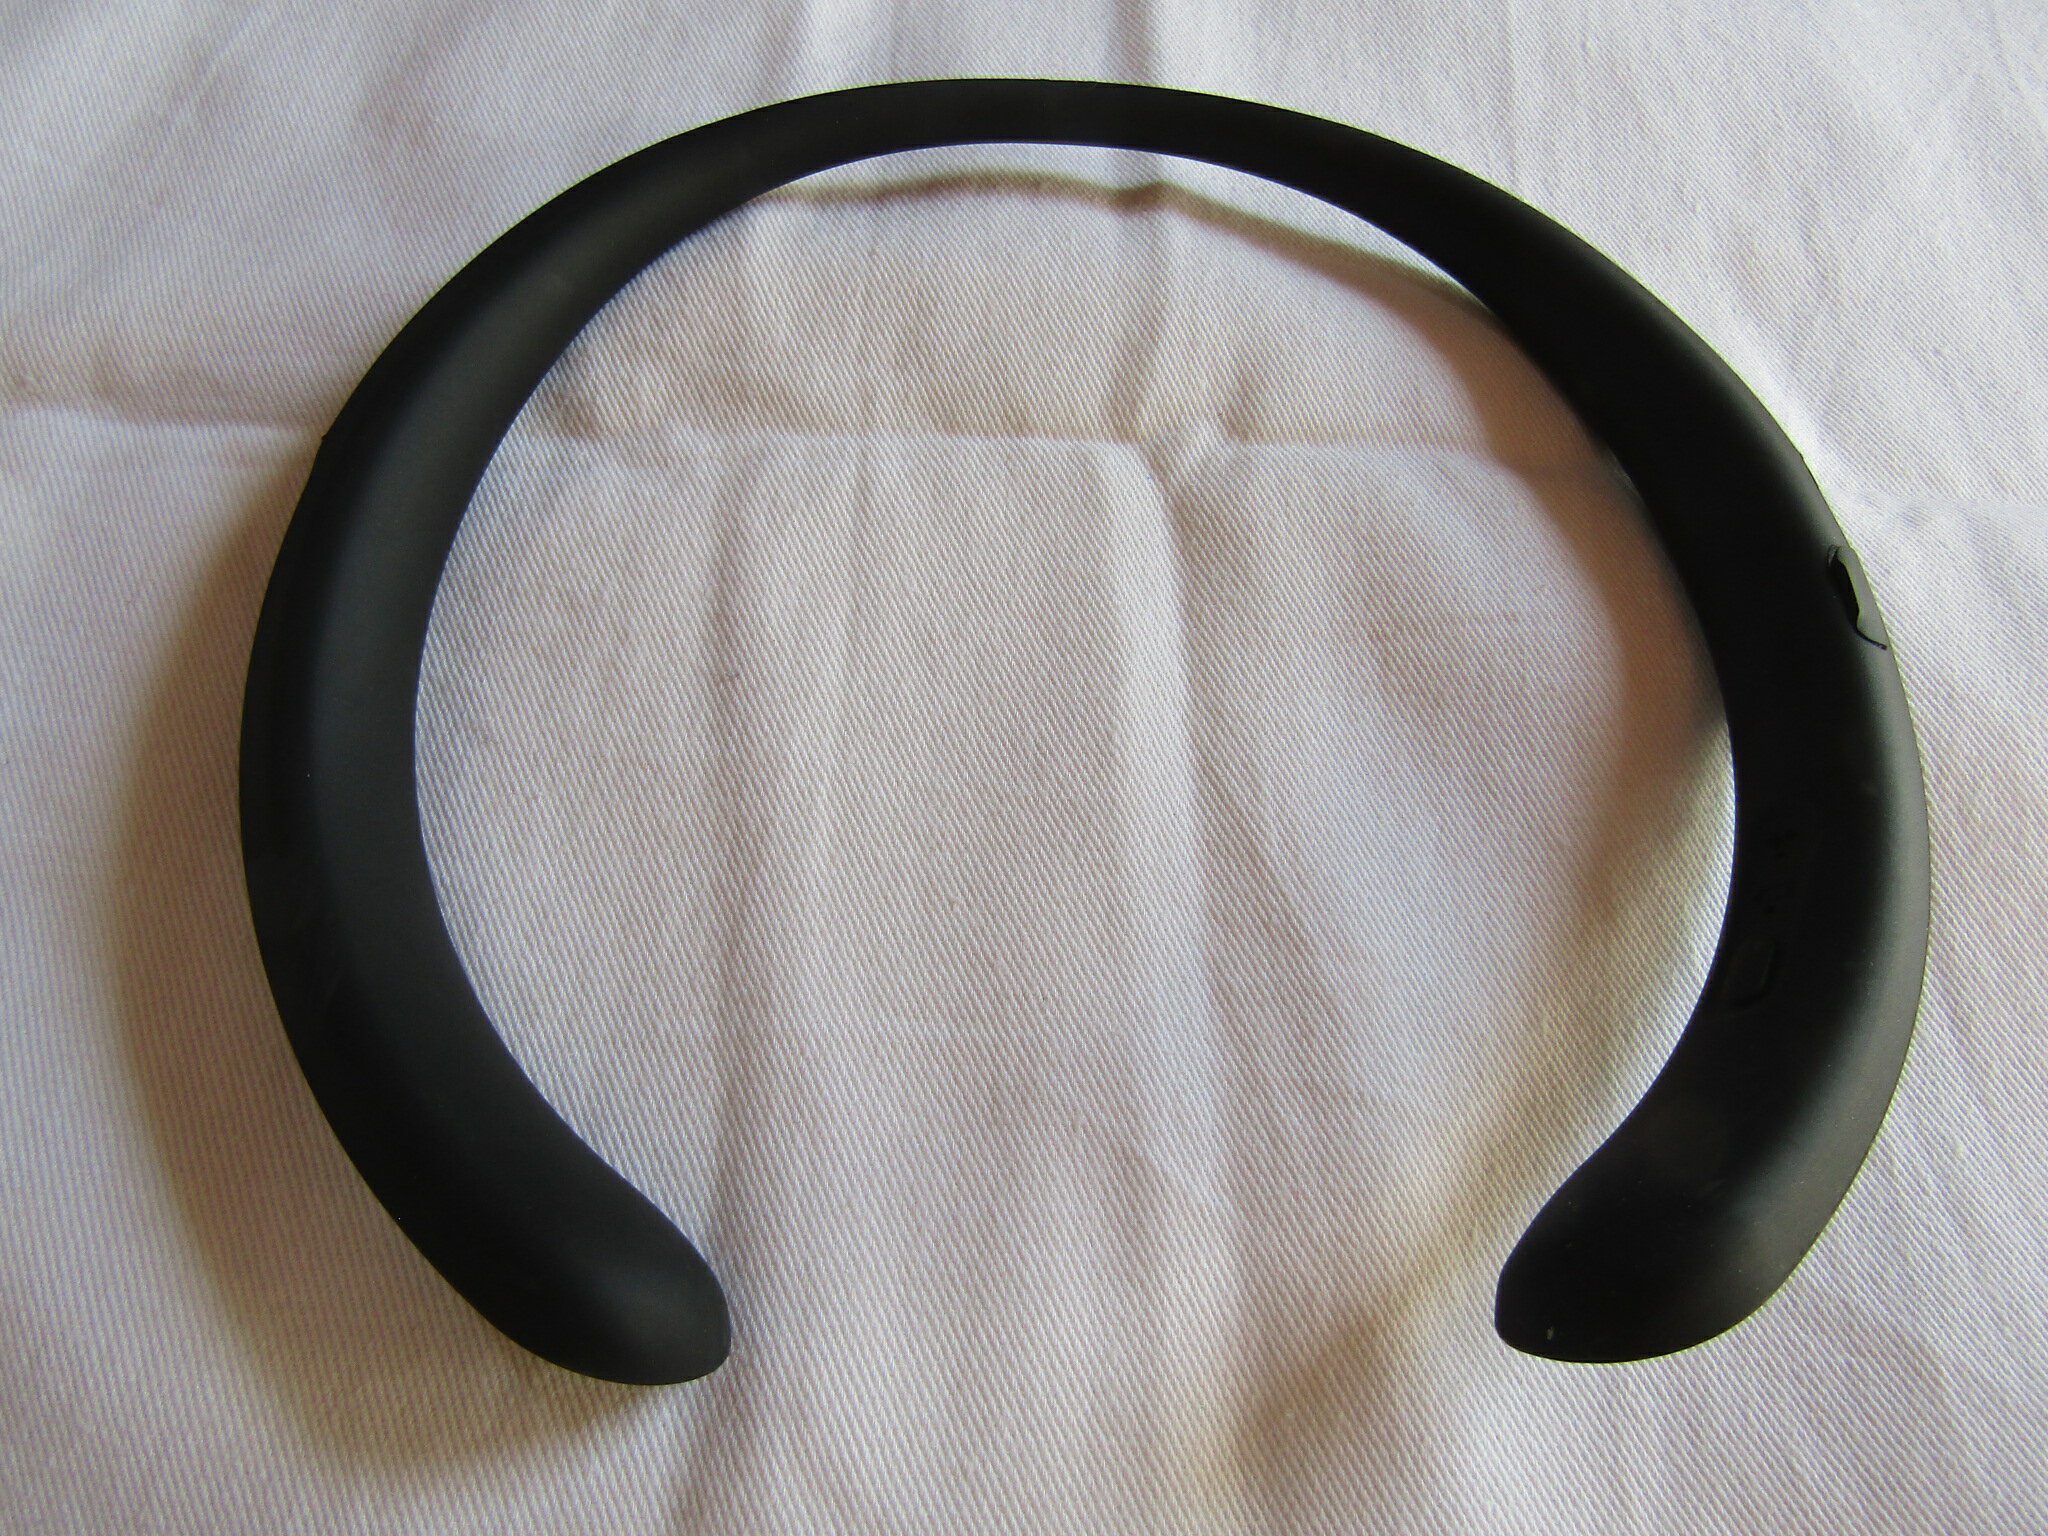 Replacement Neckband For Bose Quietcontrol 30 Qc30 Wireless Headphones Sold By Smart Supply Rakuten Com Shop